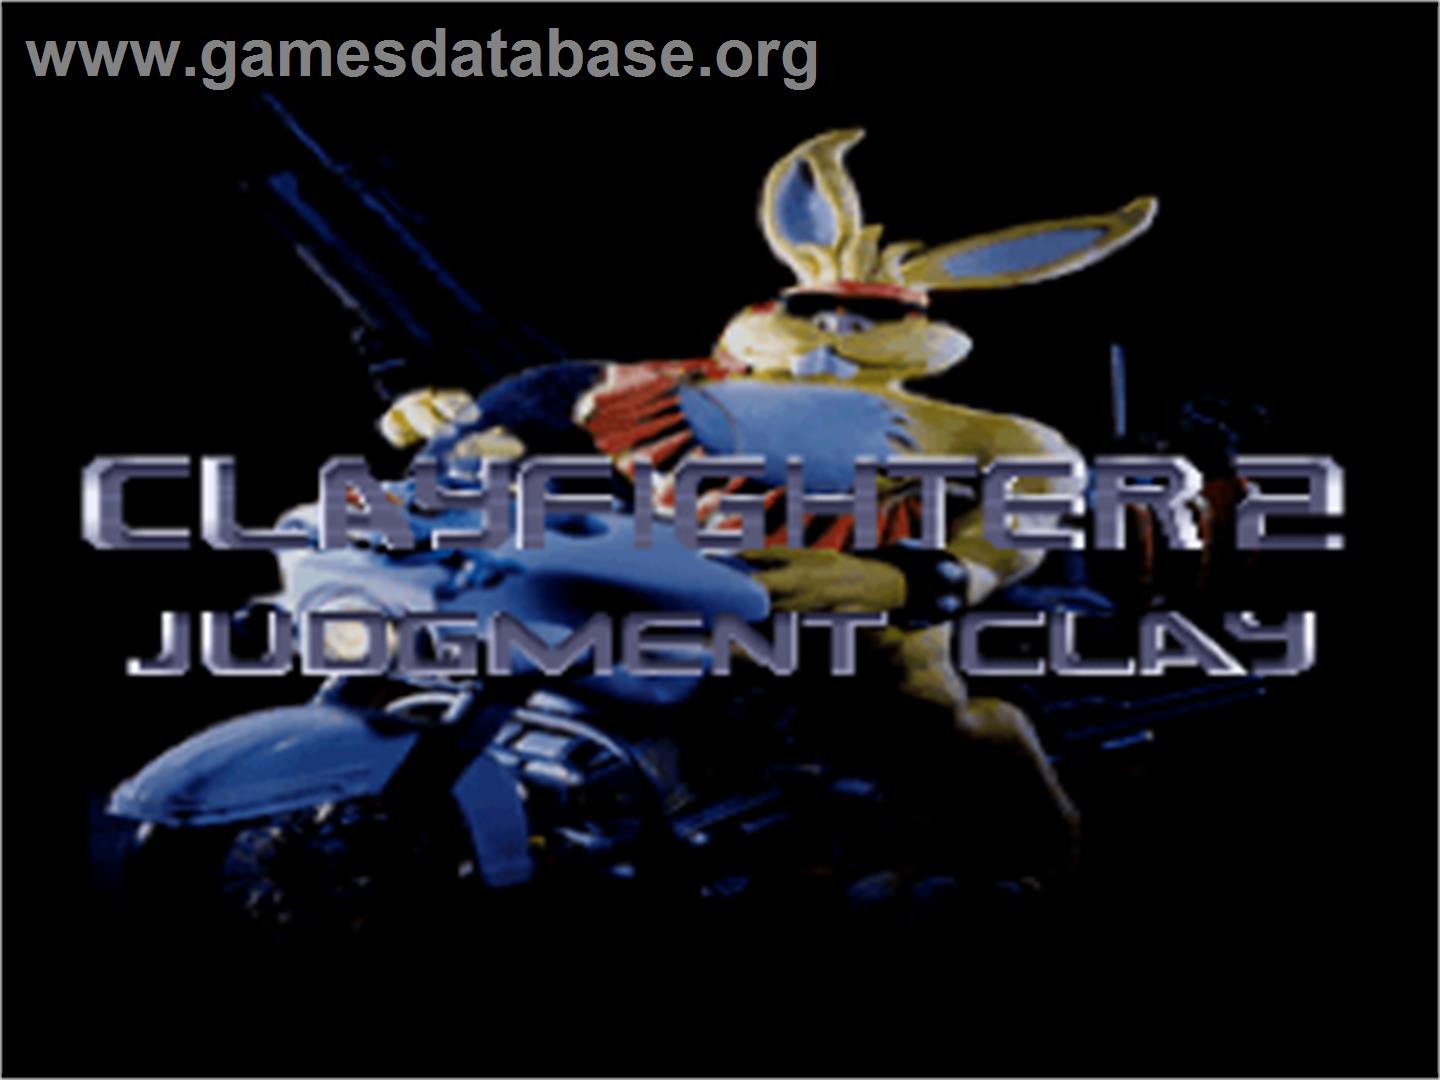 Clay Fighter 2: Judgement Clay - Nintendo SNES - Artwork - Title Screen